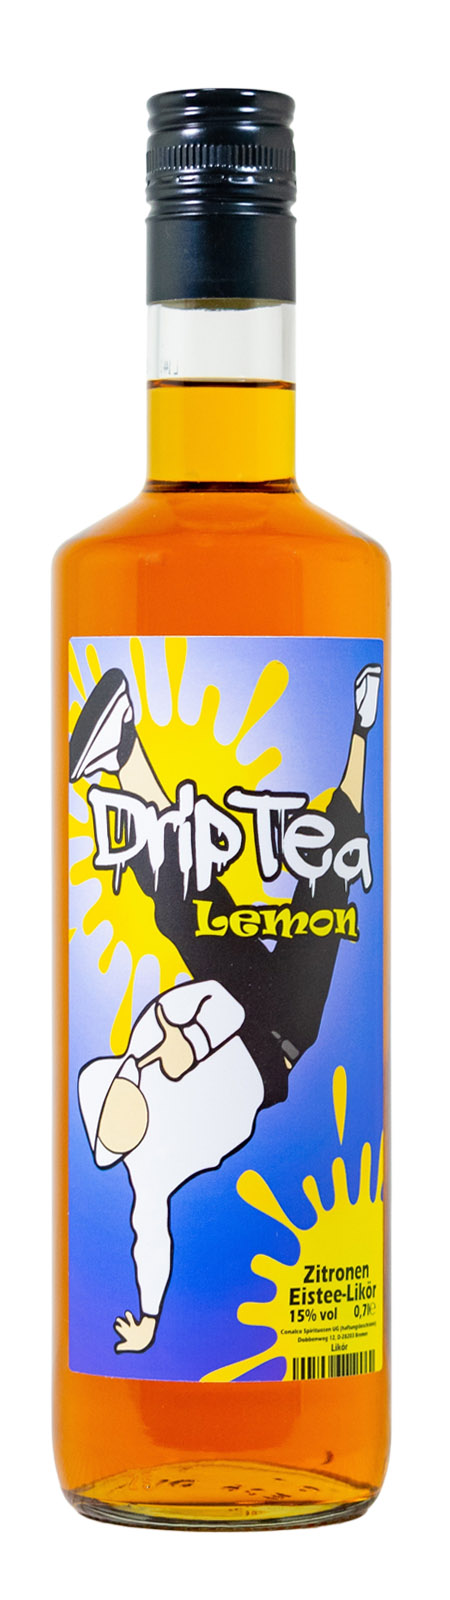 DripTea Lemon Zitrone Eistee-Likör - 0,7L 15% vol